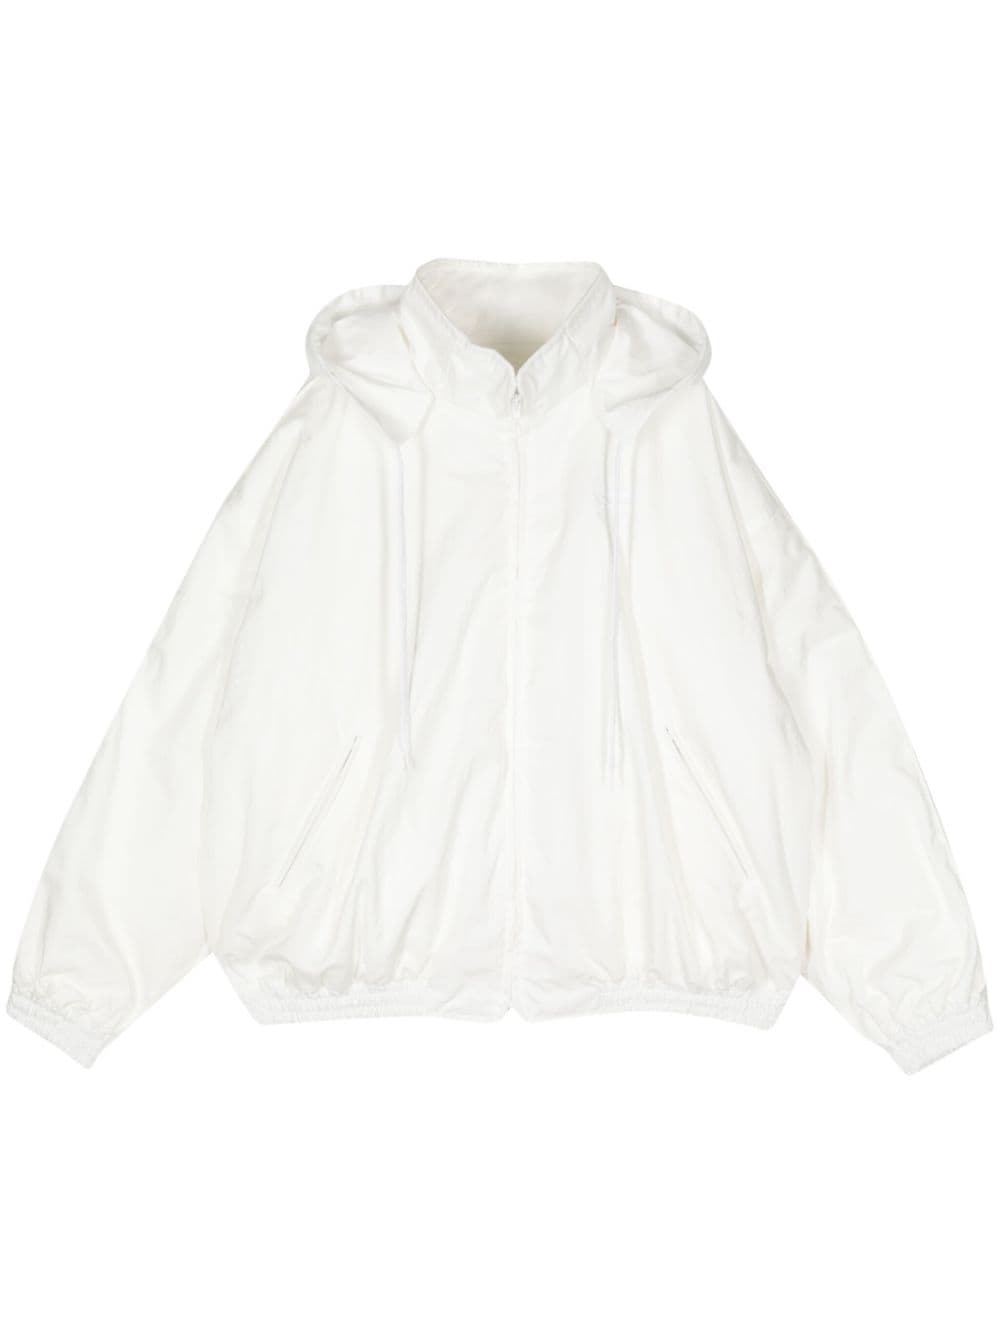 Hed Mayner X Reebok Ltd Hooded Track Jacket In White